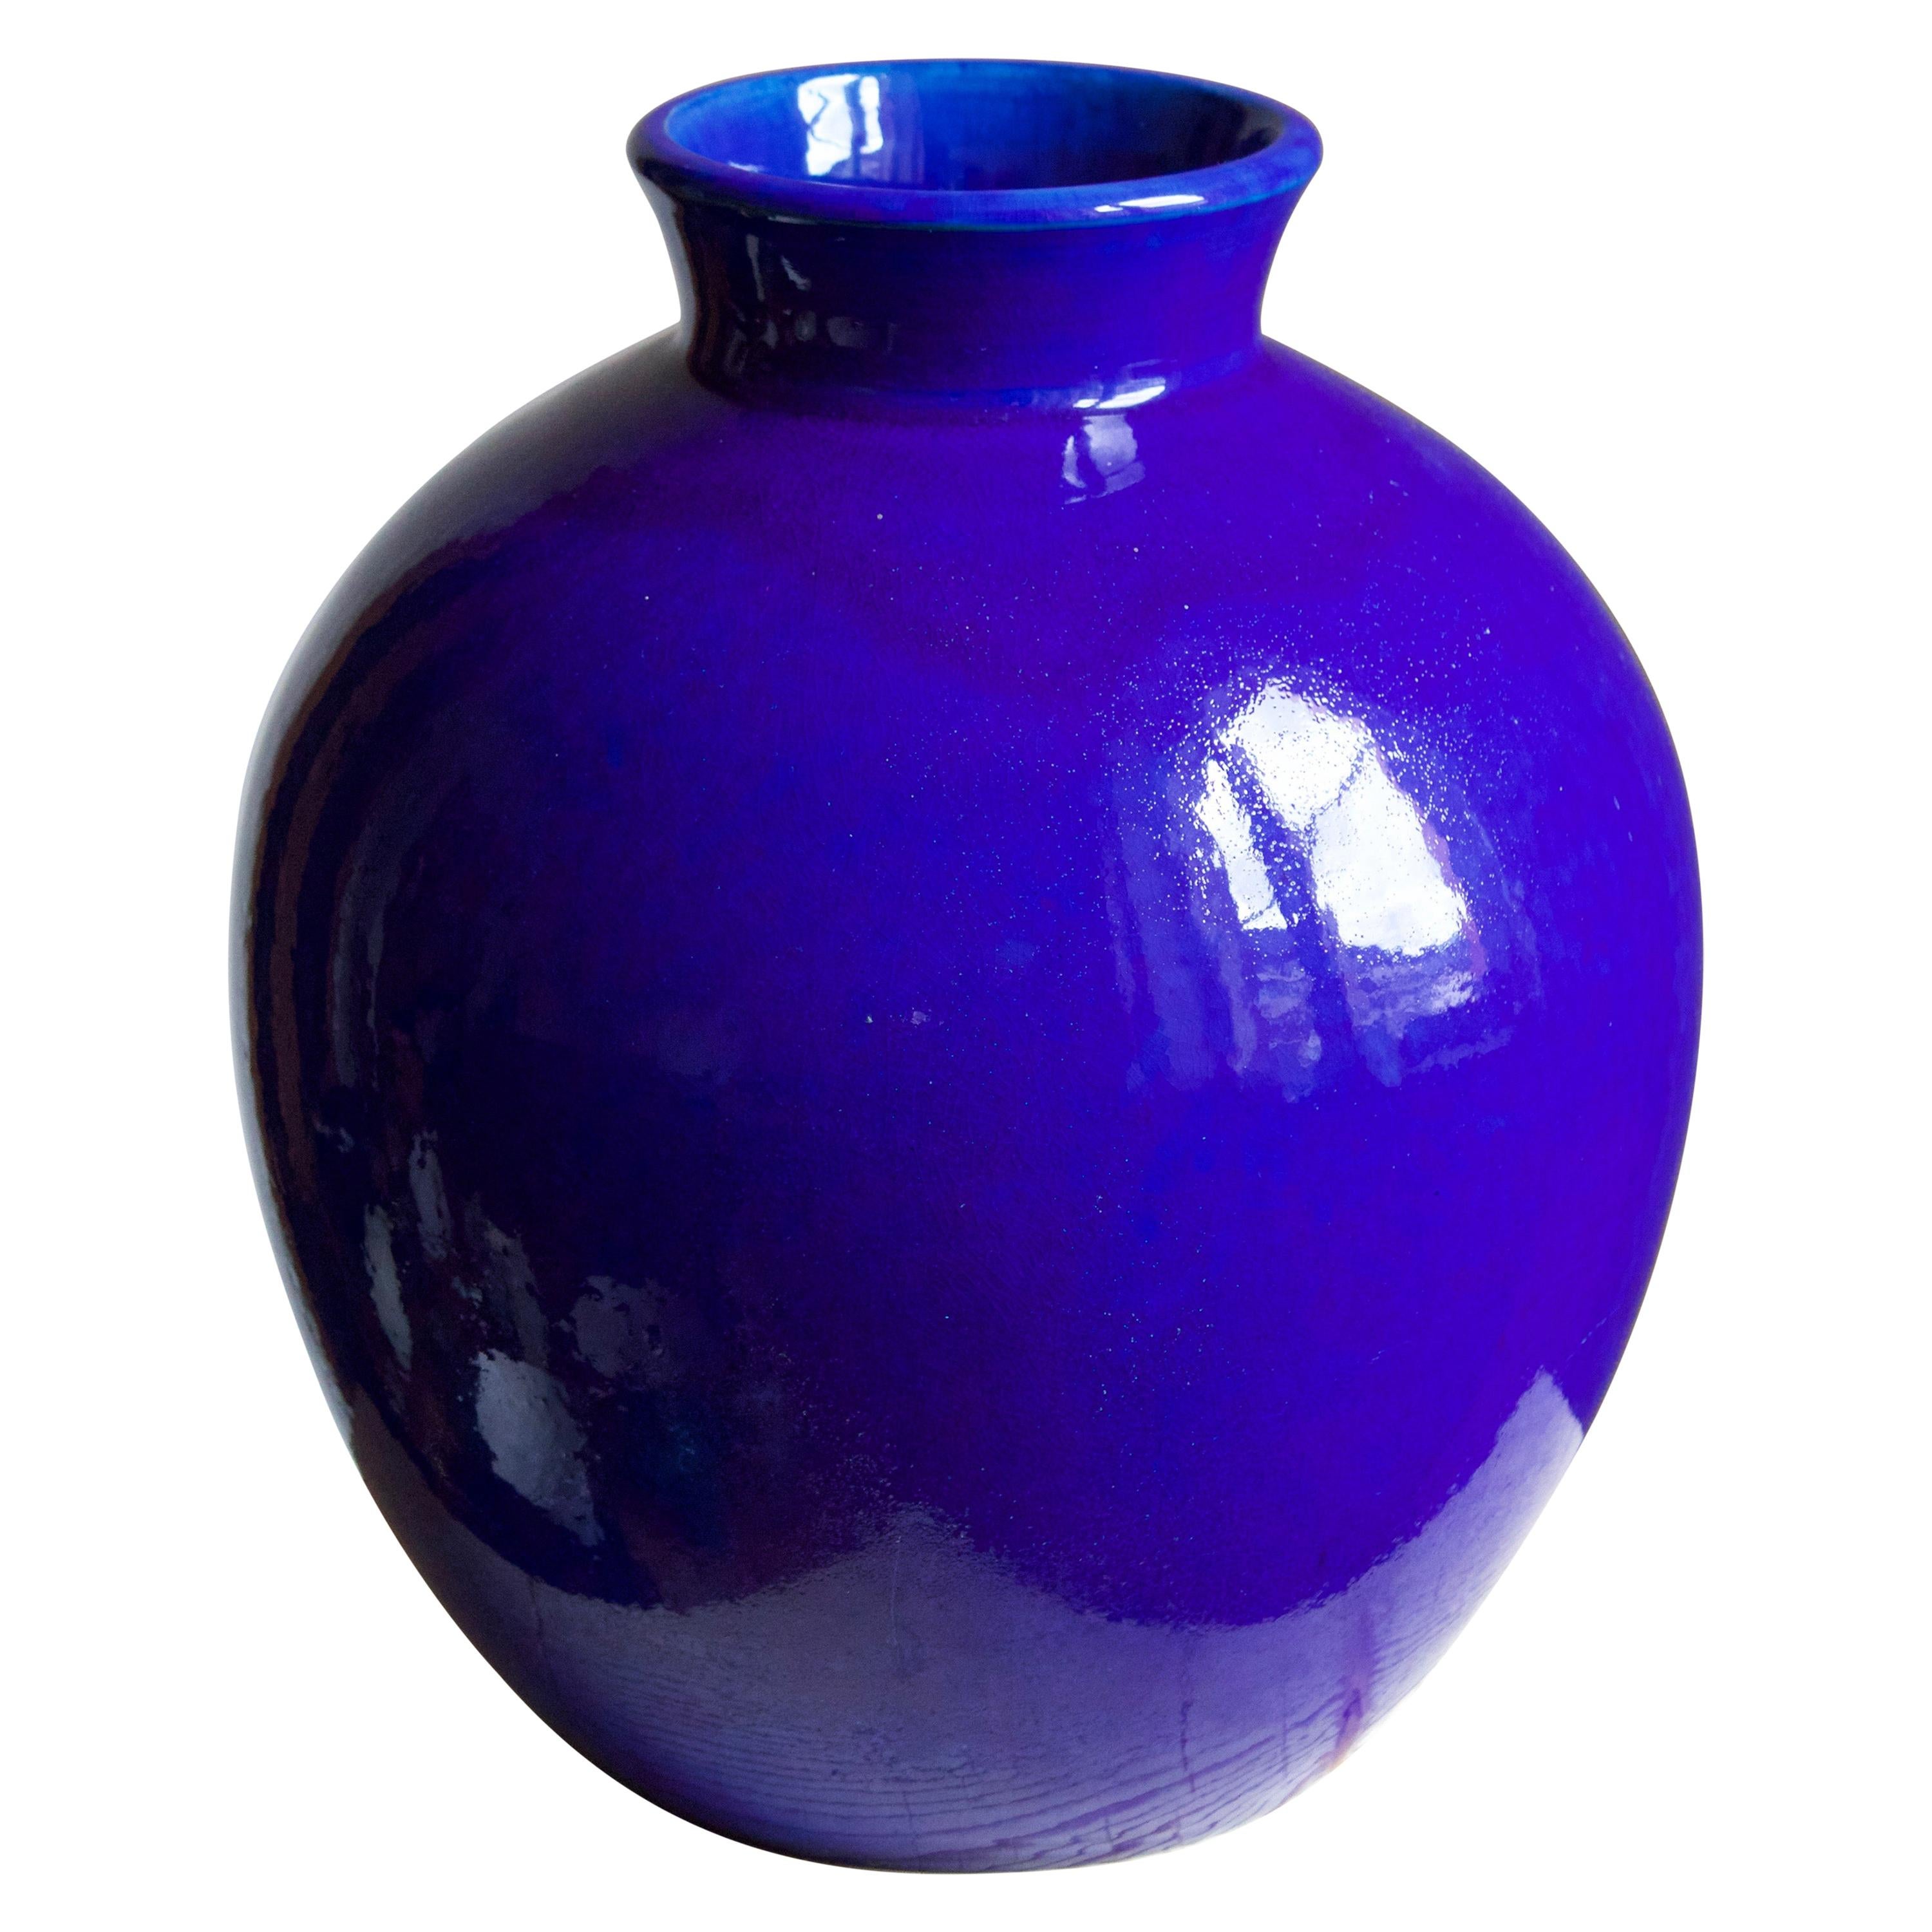 Herman Kähler, Large Vase, Blue Glazed Earthenware, Denmark, C. 1900